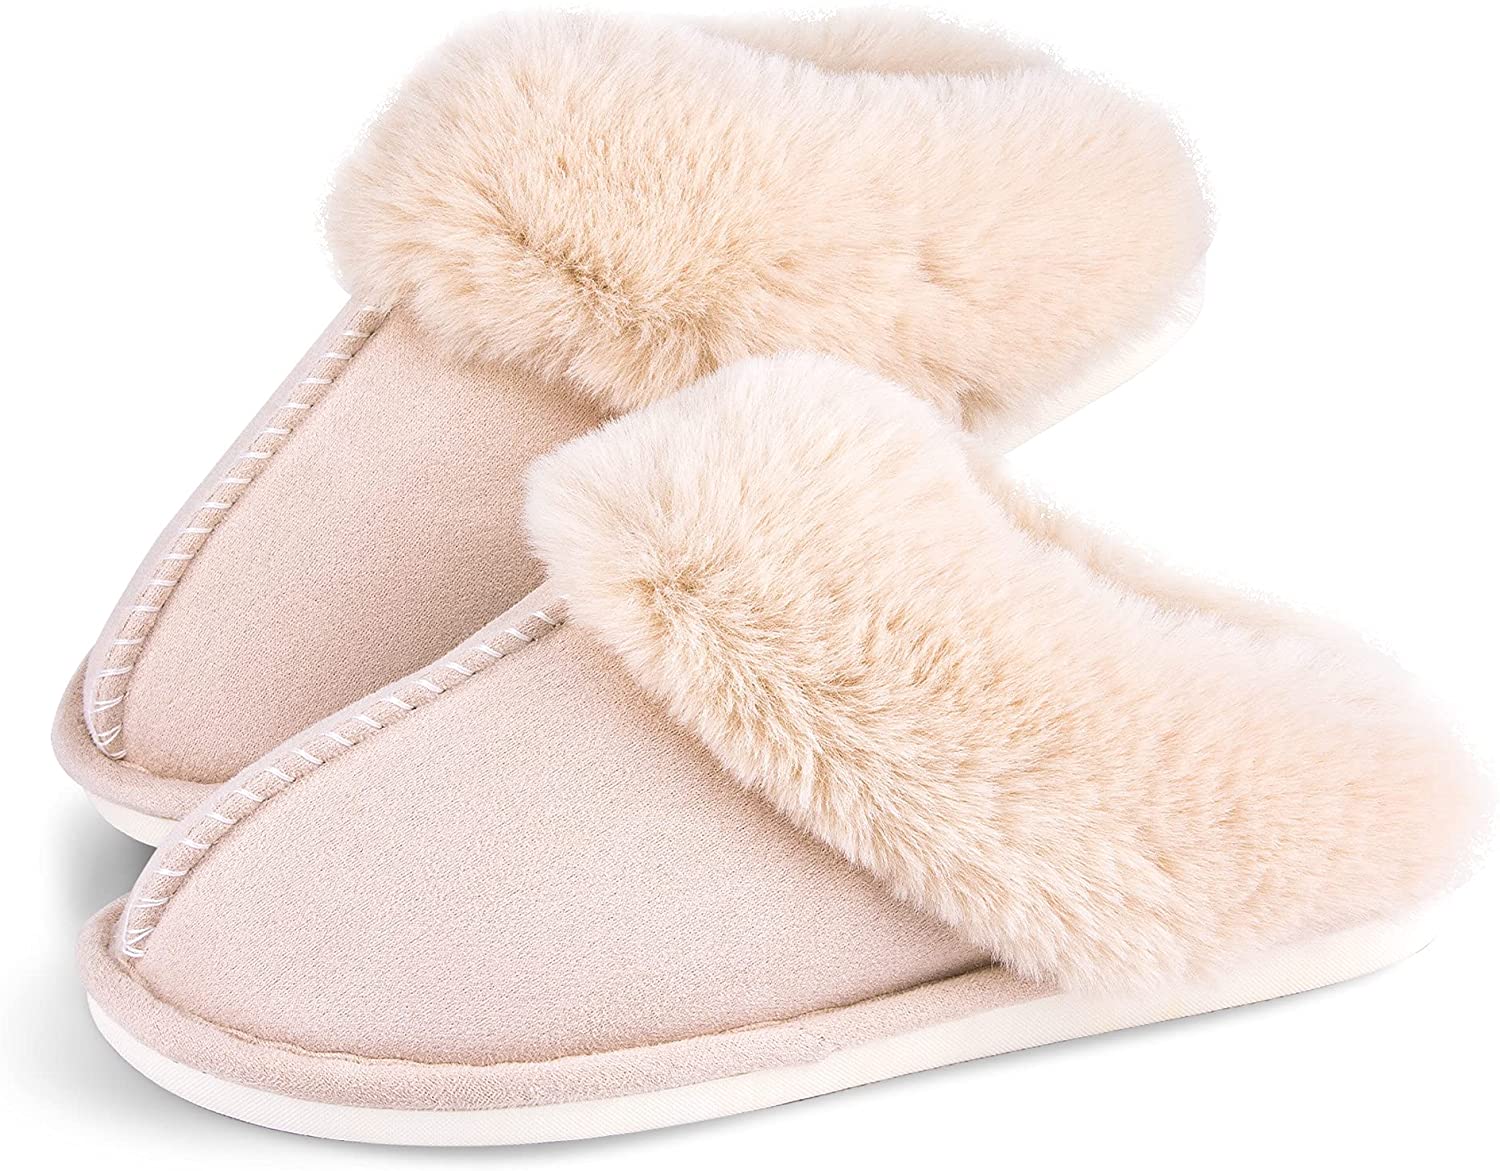 Dainzuy Women Soft Home Slippers Winter Warm Comfy Slip On Memory Foam Slippers Plush Soft Anti-Slip House Shoes 